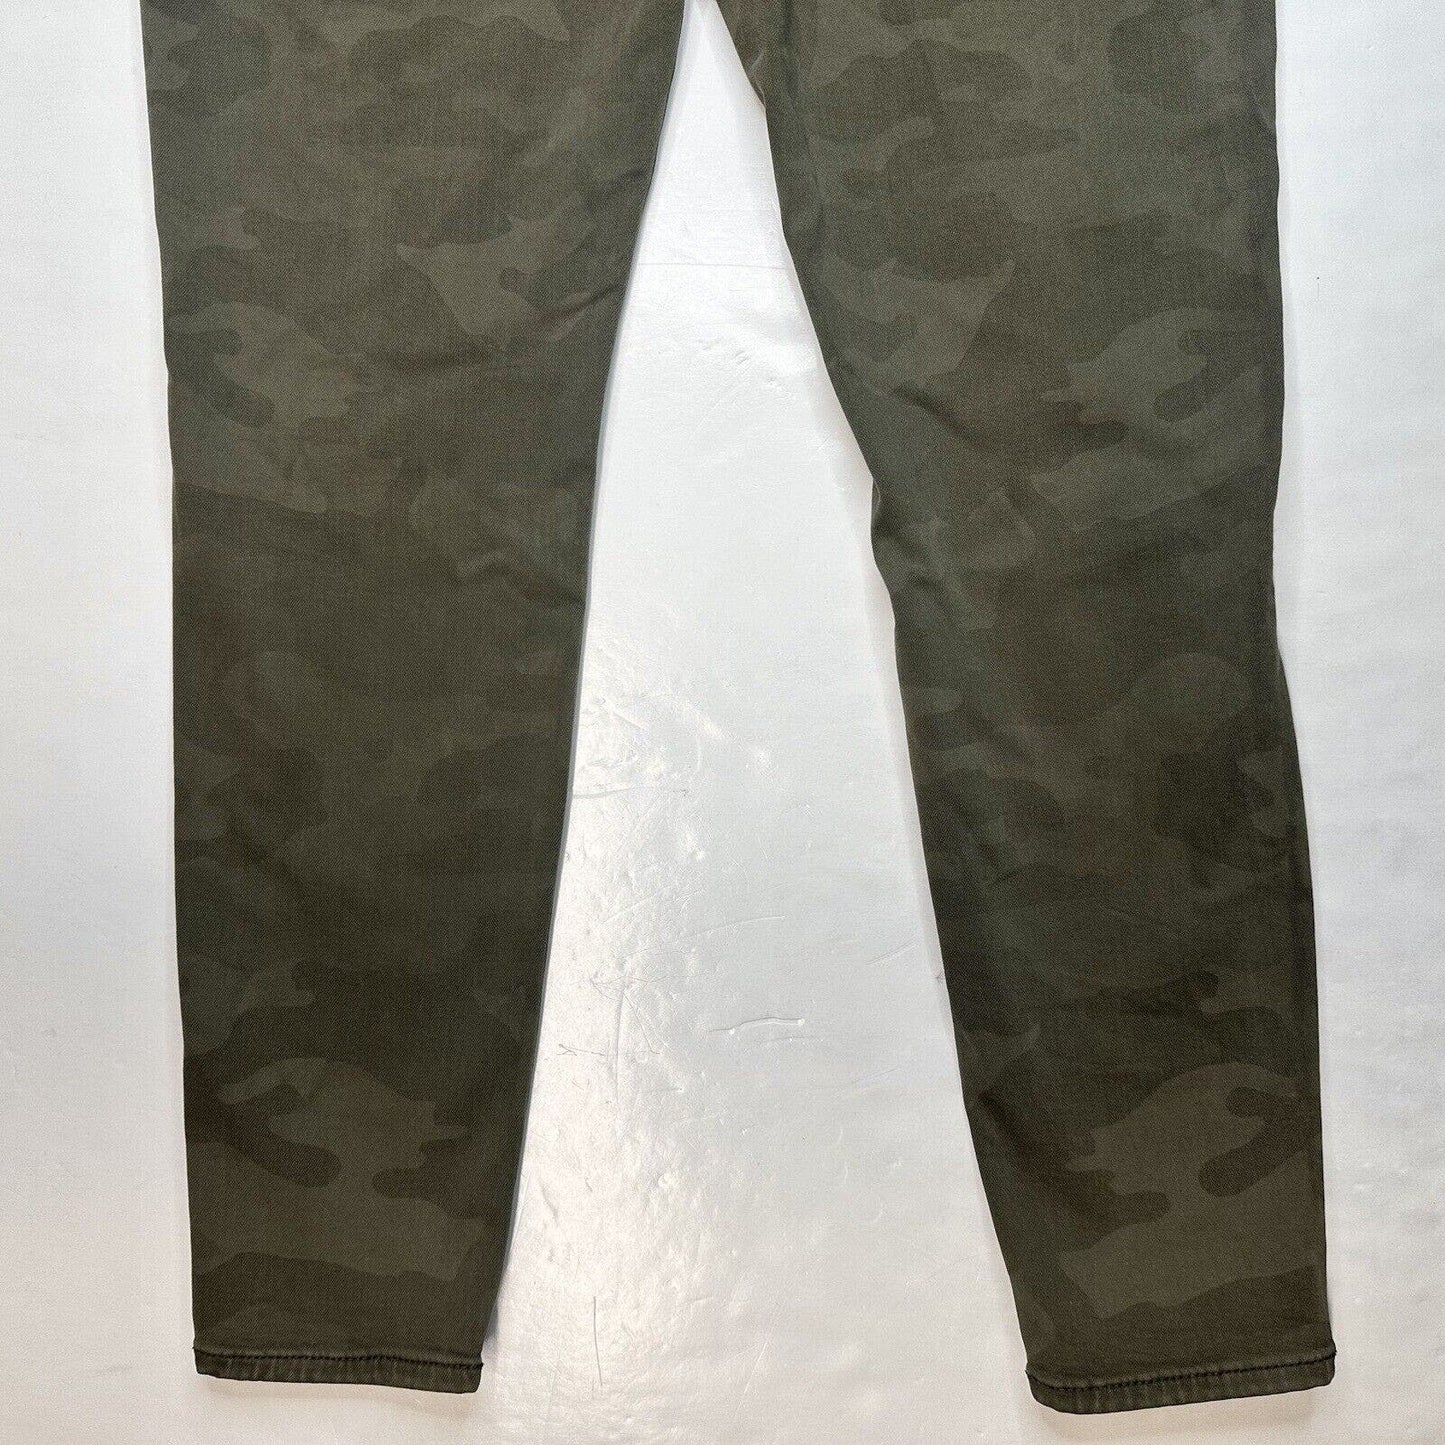 American Eagle Curvy Super Hi-Rise Jegging 8 Green Camo Next Level Stretch Jeans